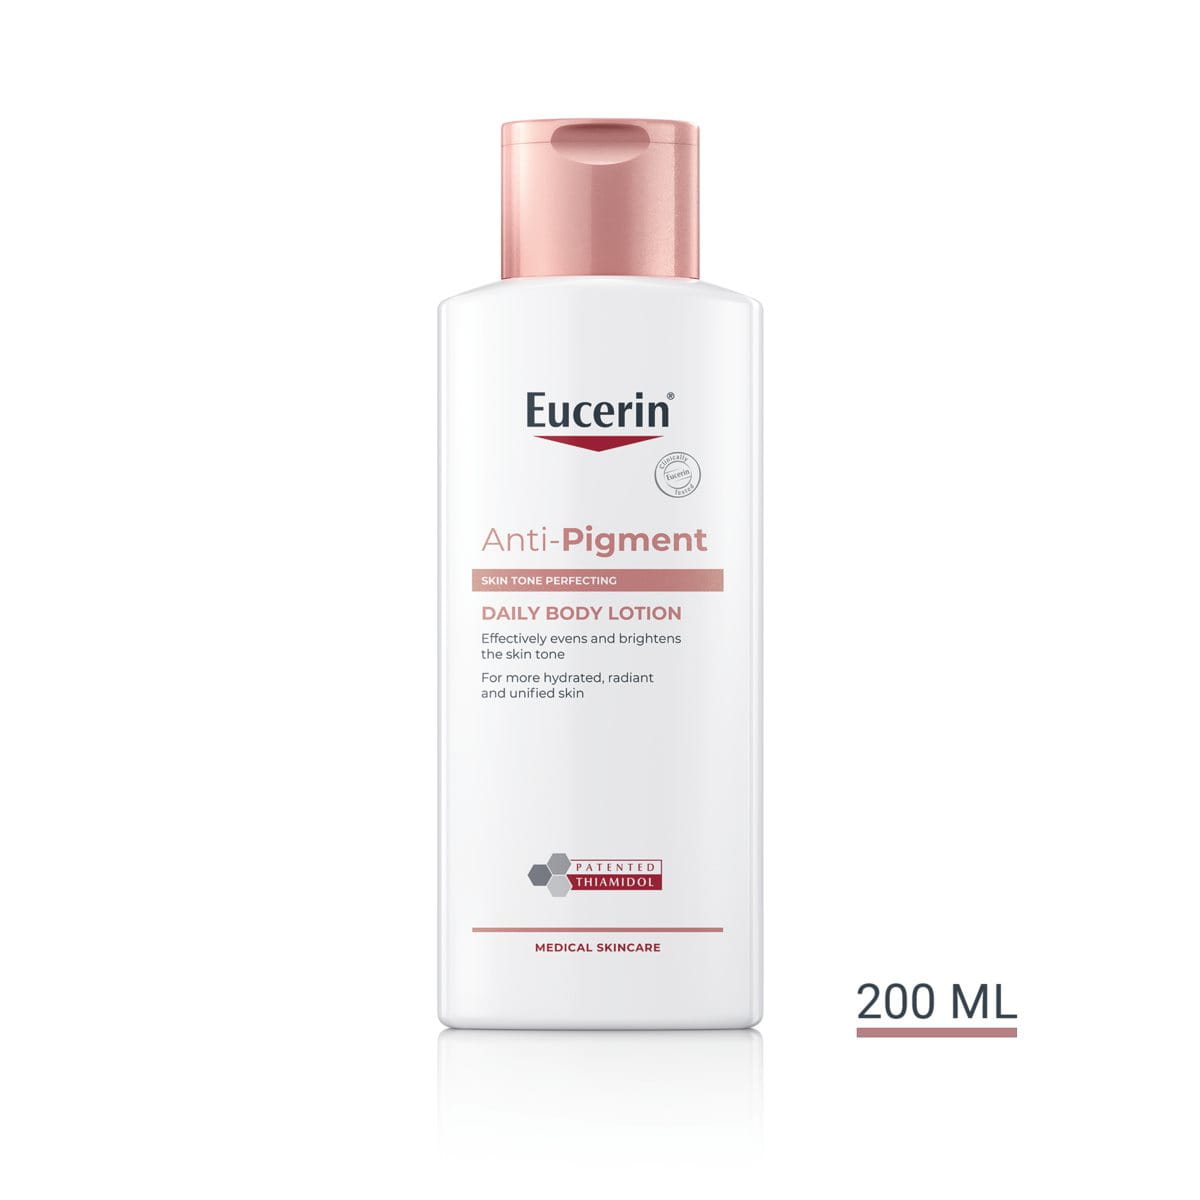 Eucerin Anti-Pigment Skin Tone Perfecting Daily Body Lotion